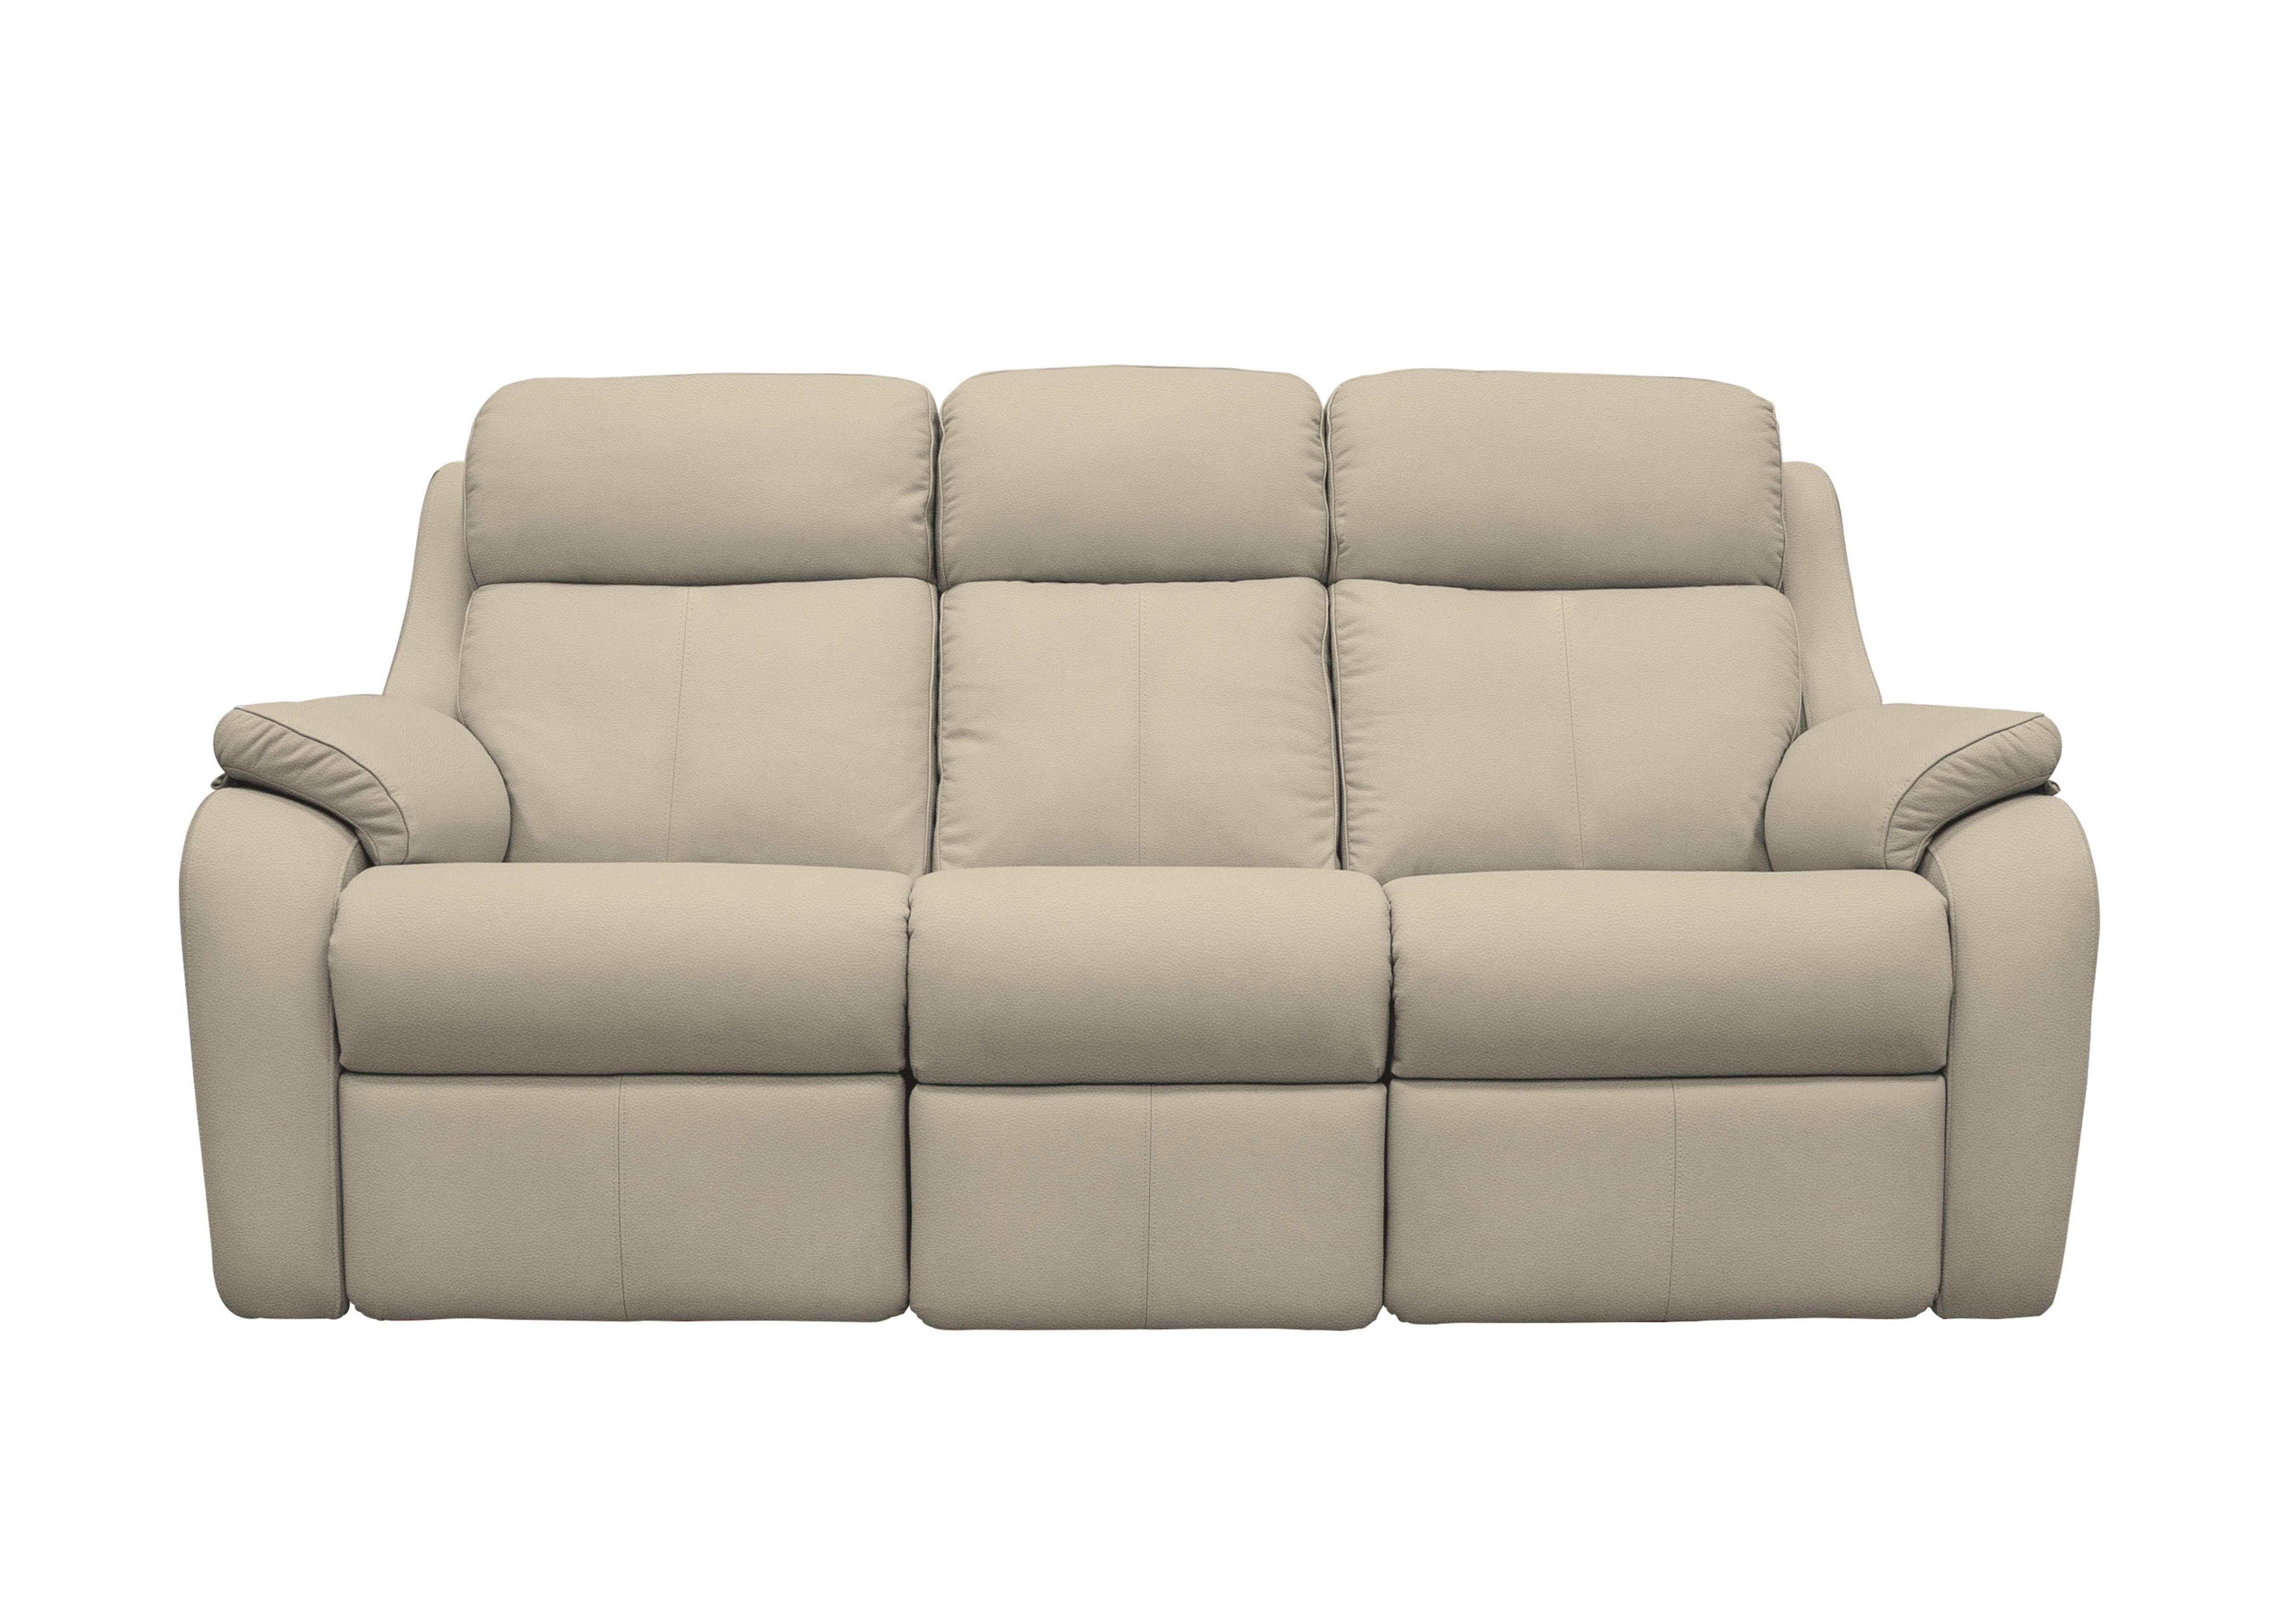 Kingsbury 3 Seater Leather Sofa in H001 Oxford Mushroom on Furniture Village